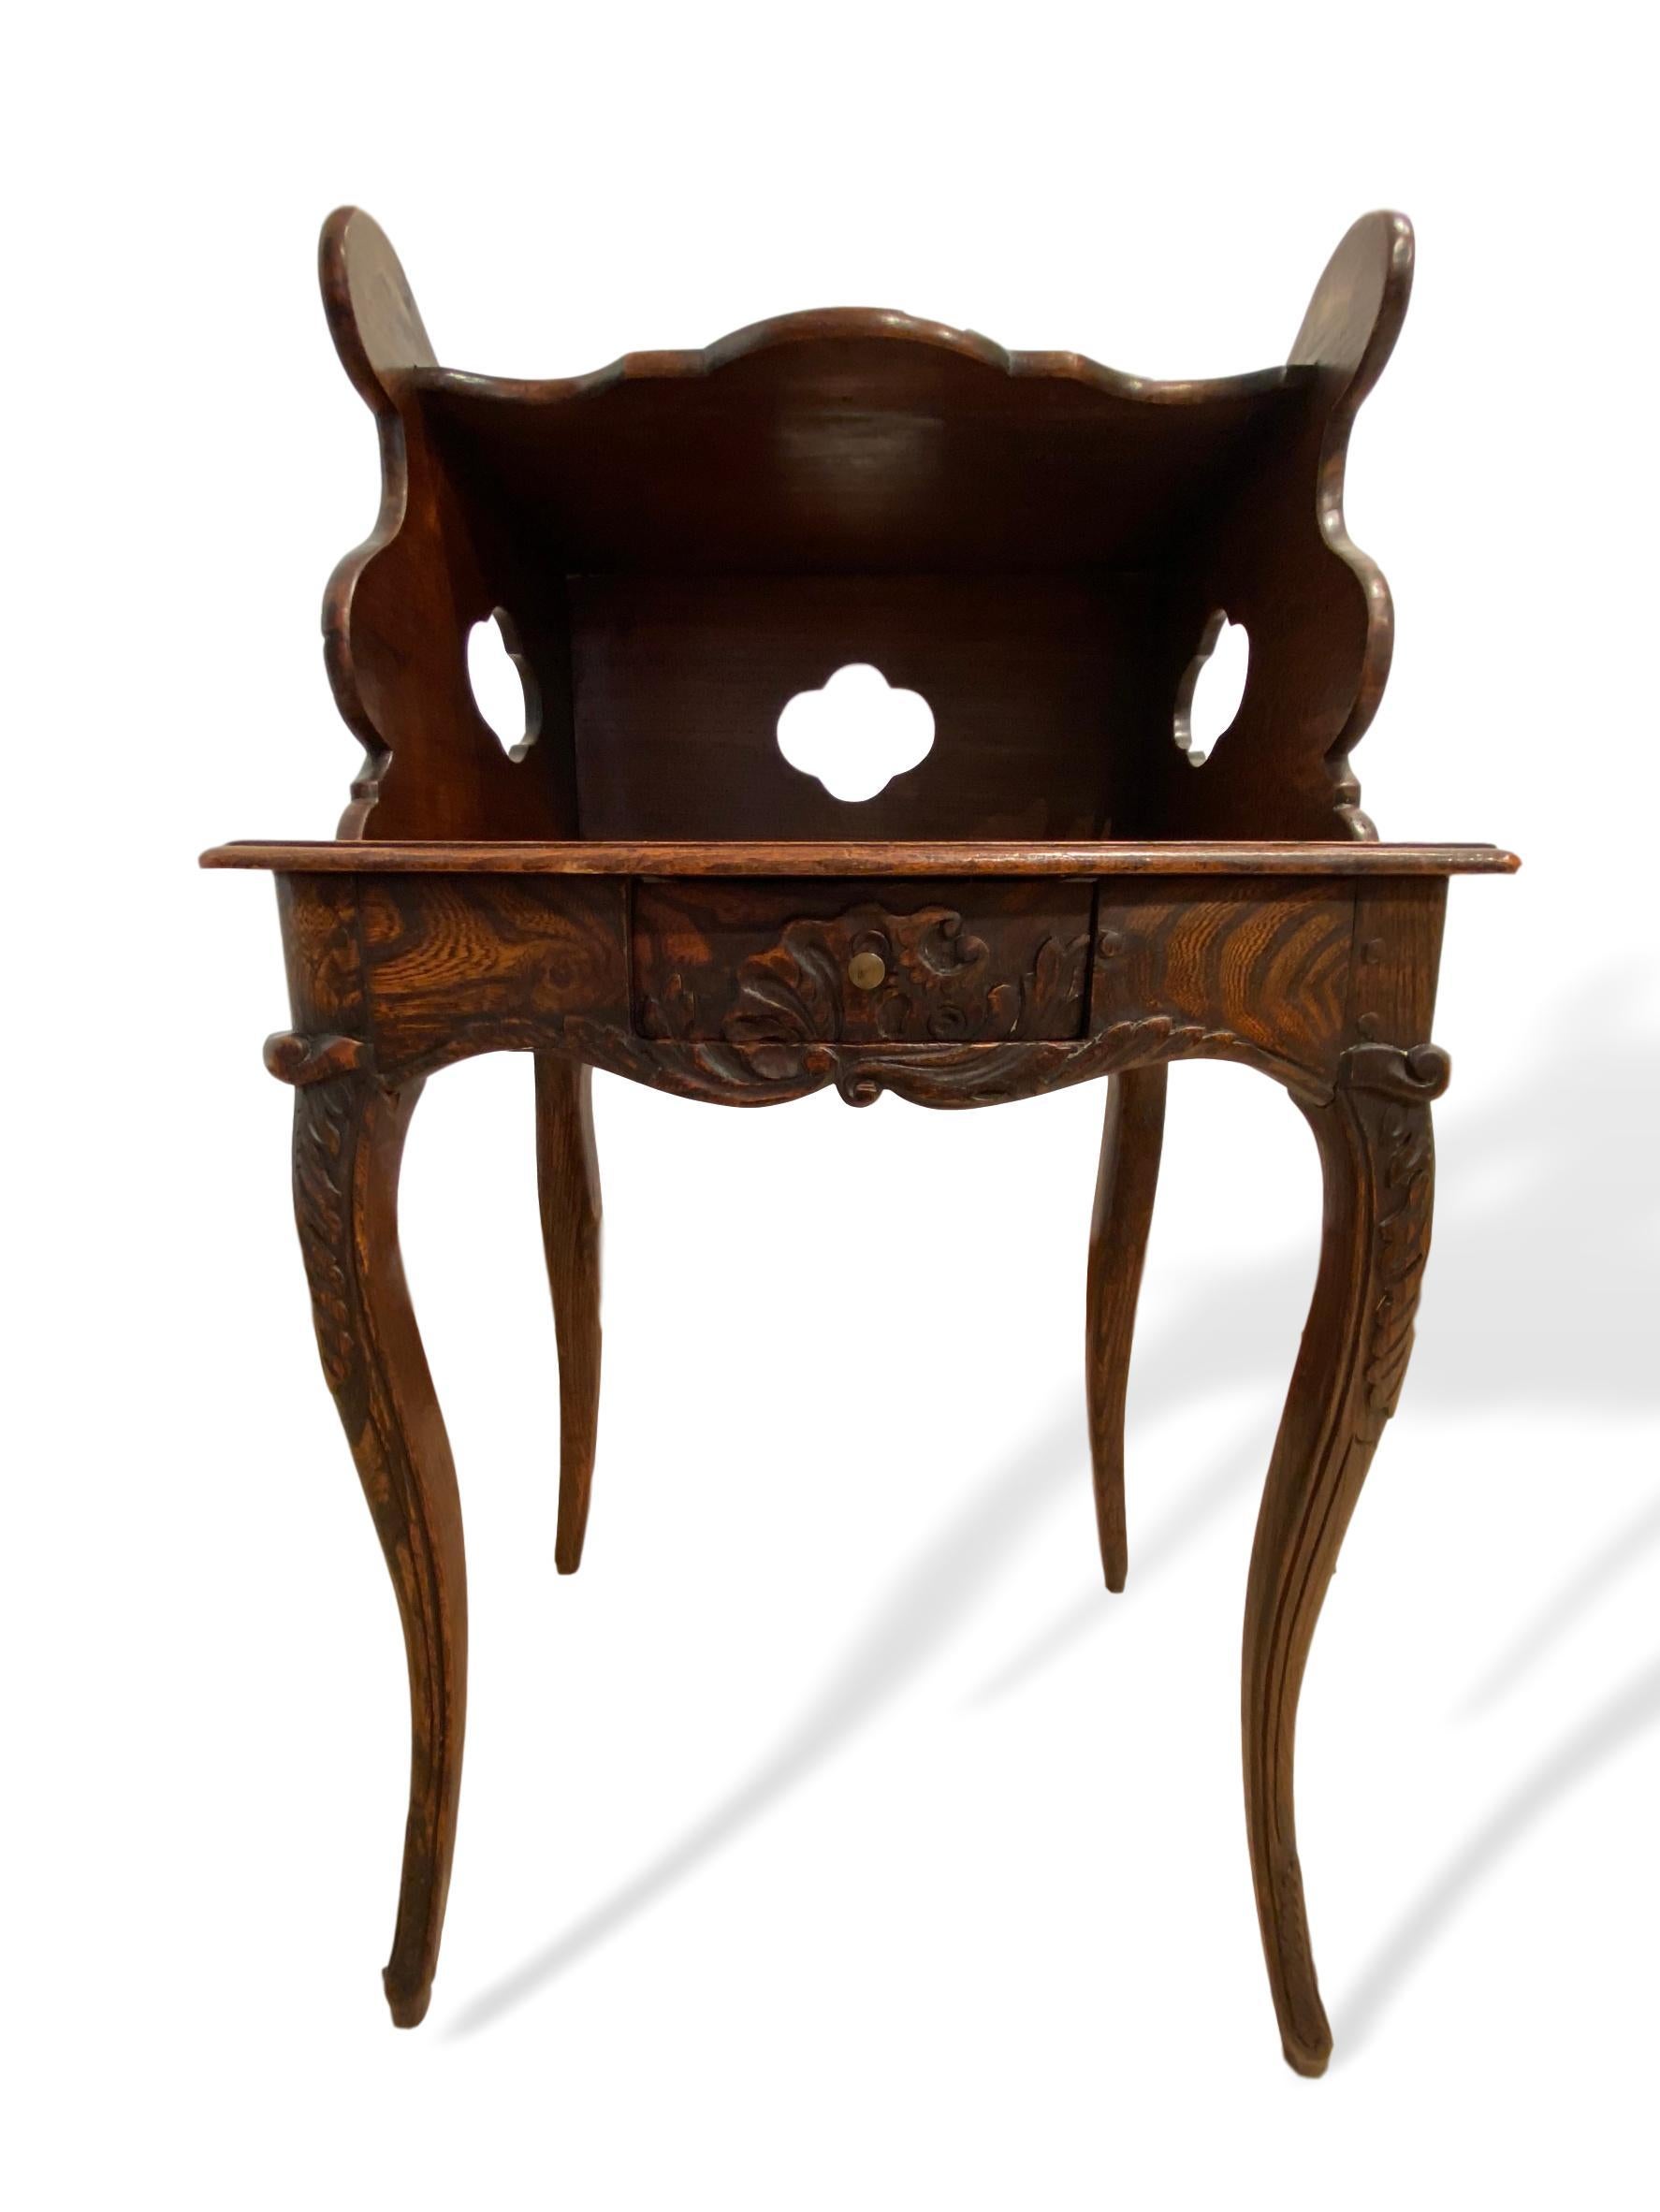 Elmwood Side Table with Gallery/Shelf, Pierced Quatrefoils, French, circa 1870 For Sale 3